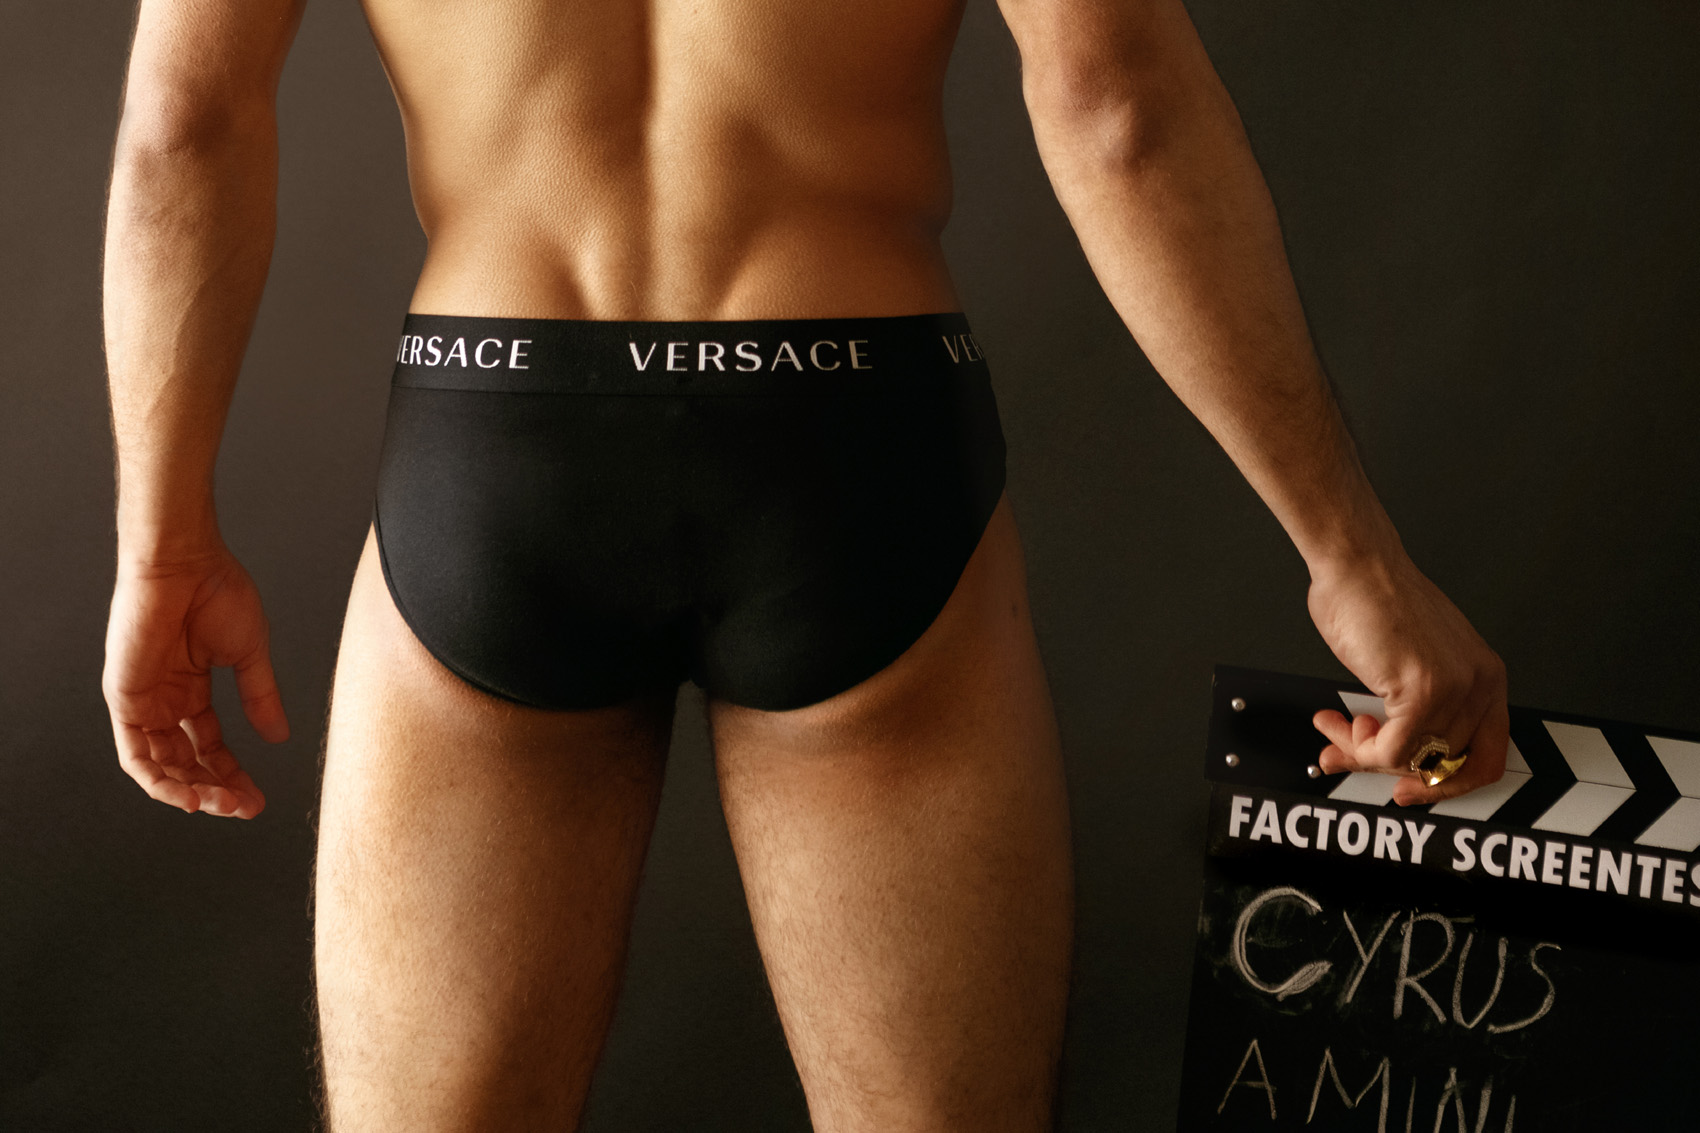 Versace underwear - Cyrus Amini by Baldovino Barani - FACTORY Screen test n1